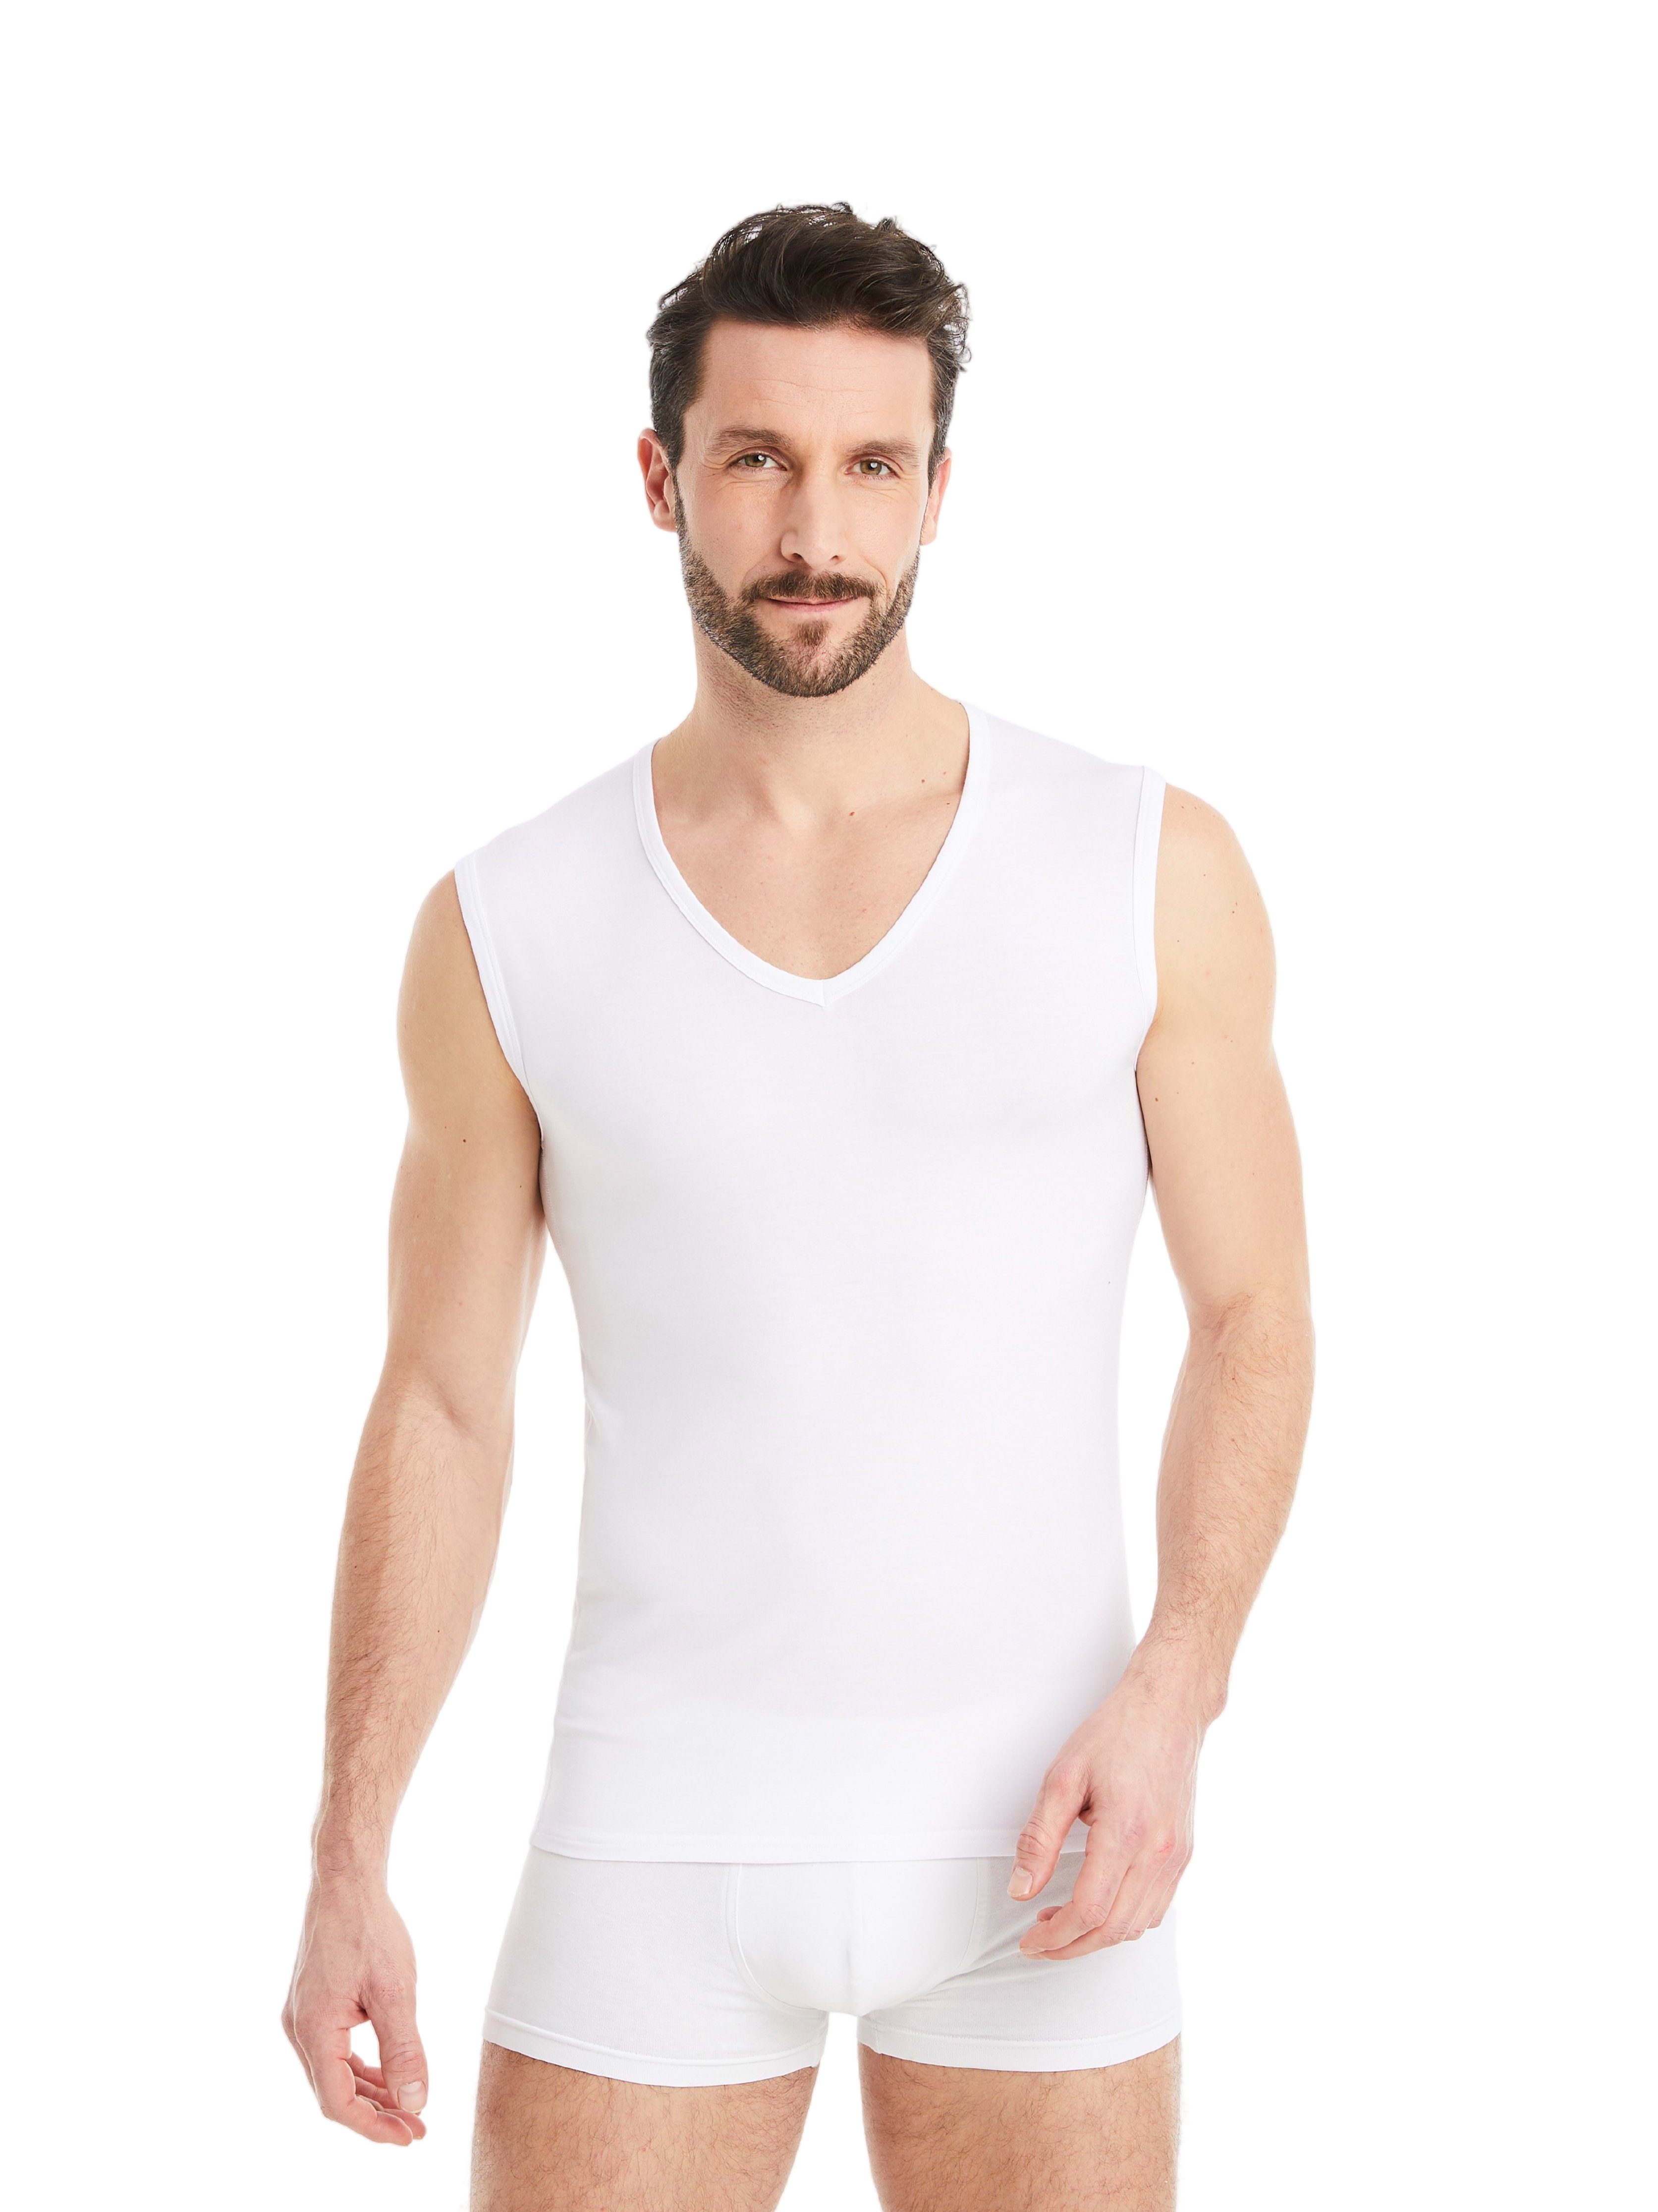 Stoff, Unterhemd maximaler FINN Micro-Modal Business feiner Herren Tragekomfort Weiß Design V-Ausschnitt Achselhemd mit Ärmellos